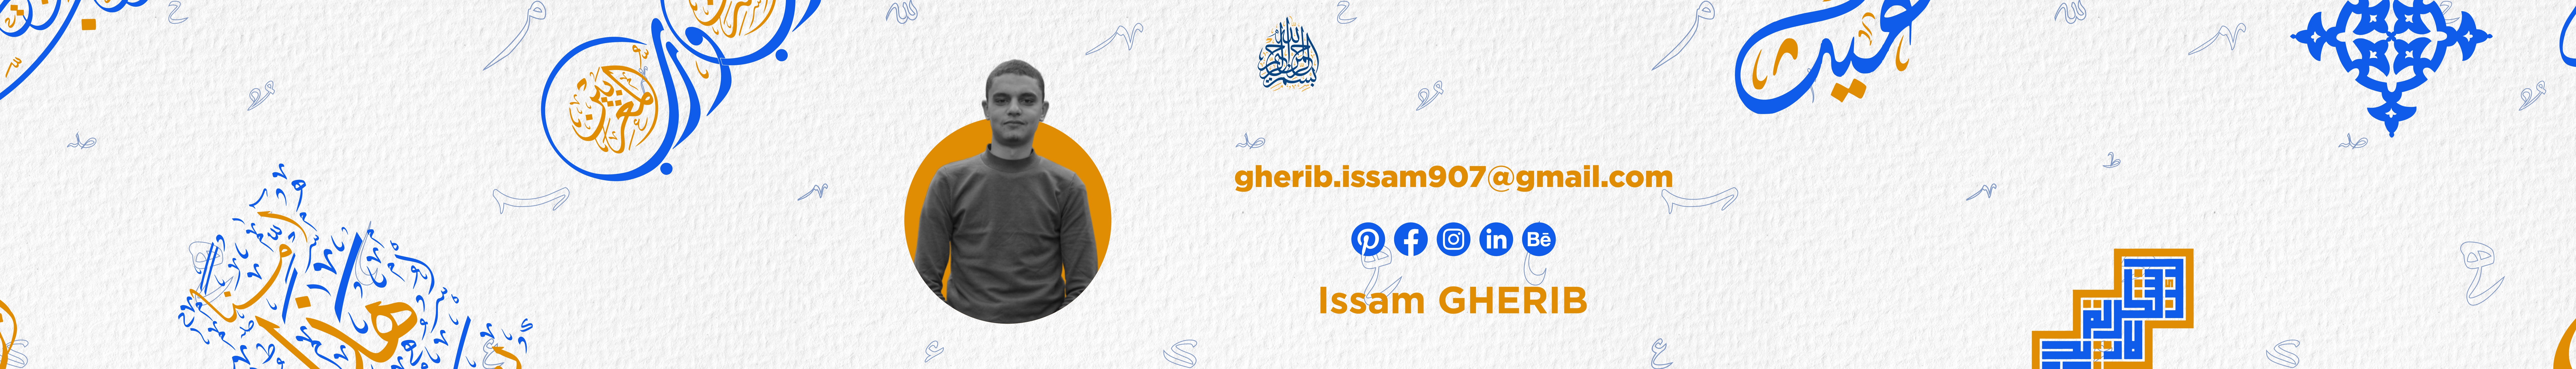 Баннер профиля Issam GHERIB